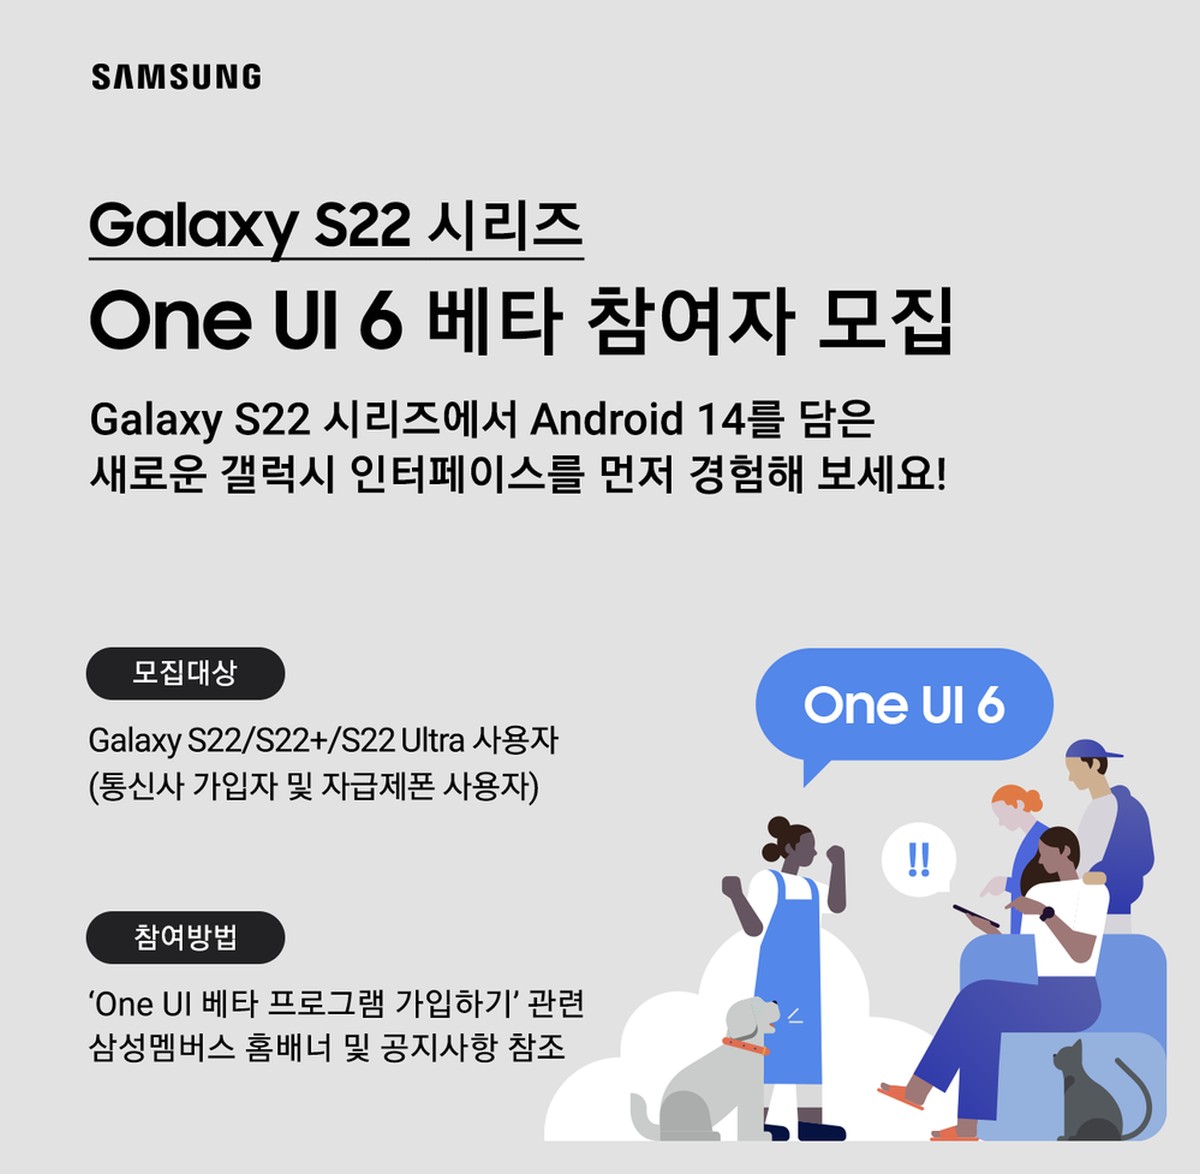 Samsung Galaxy S22 One UI 6 baner